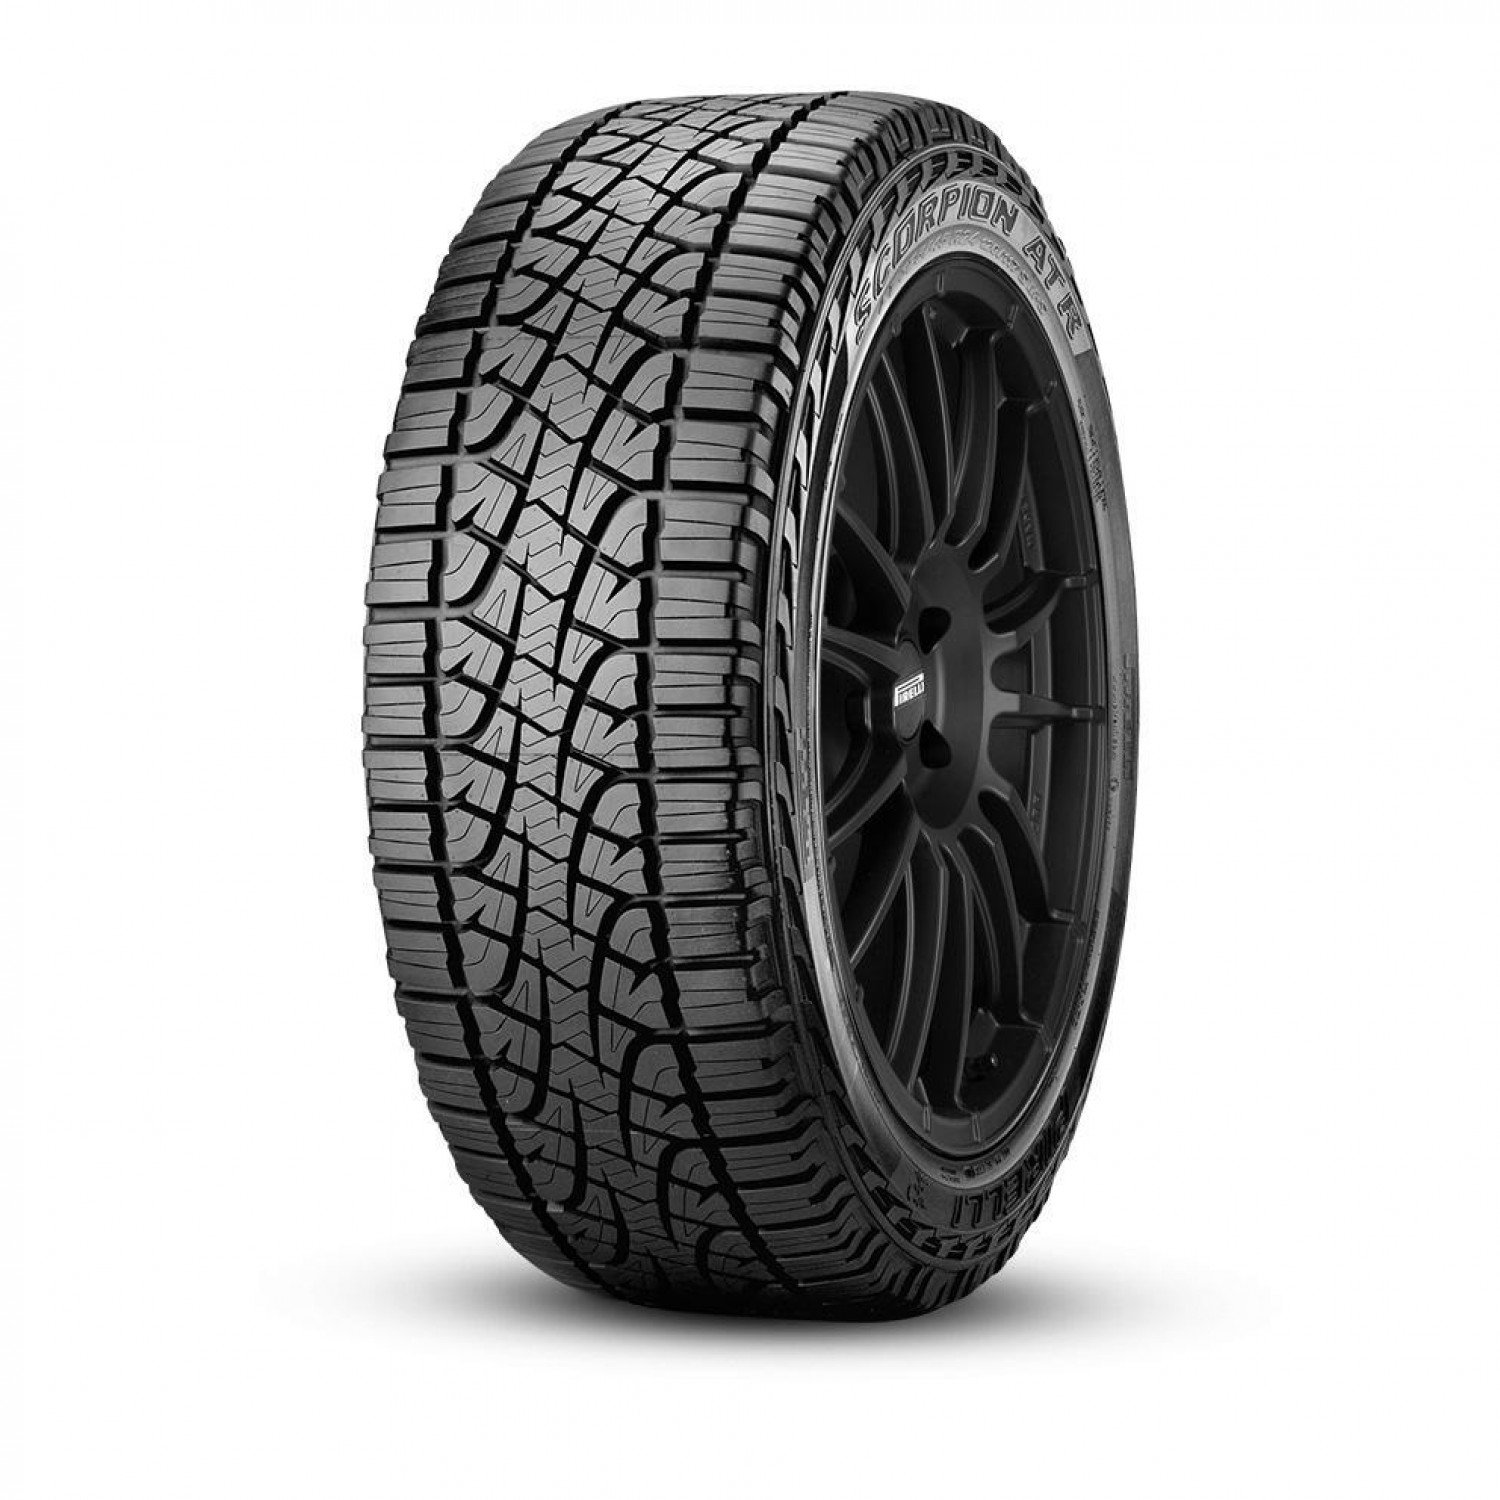 Pirelli Scorpion Outlined Tire All Terrain Plus vzn121972 Sidewall Reversable (245/70R17 White 110T) Letters/Black